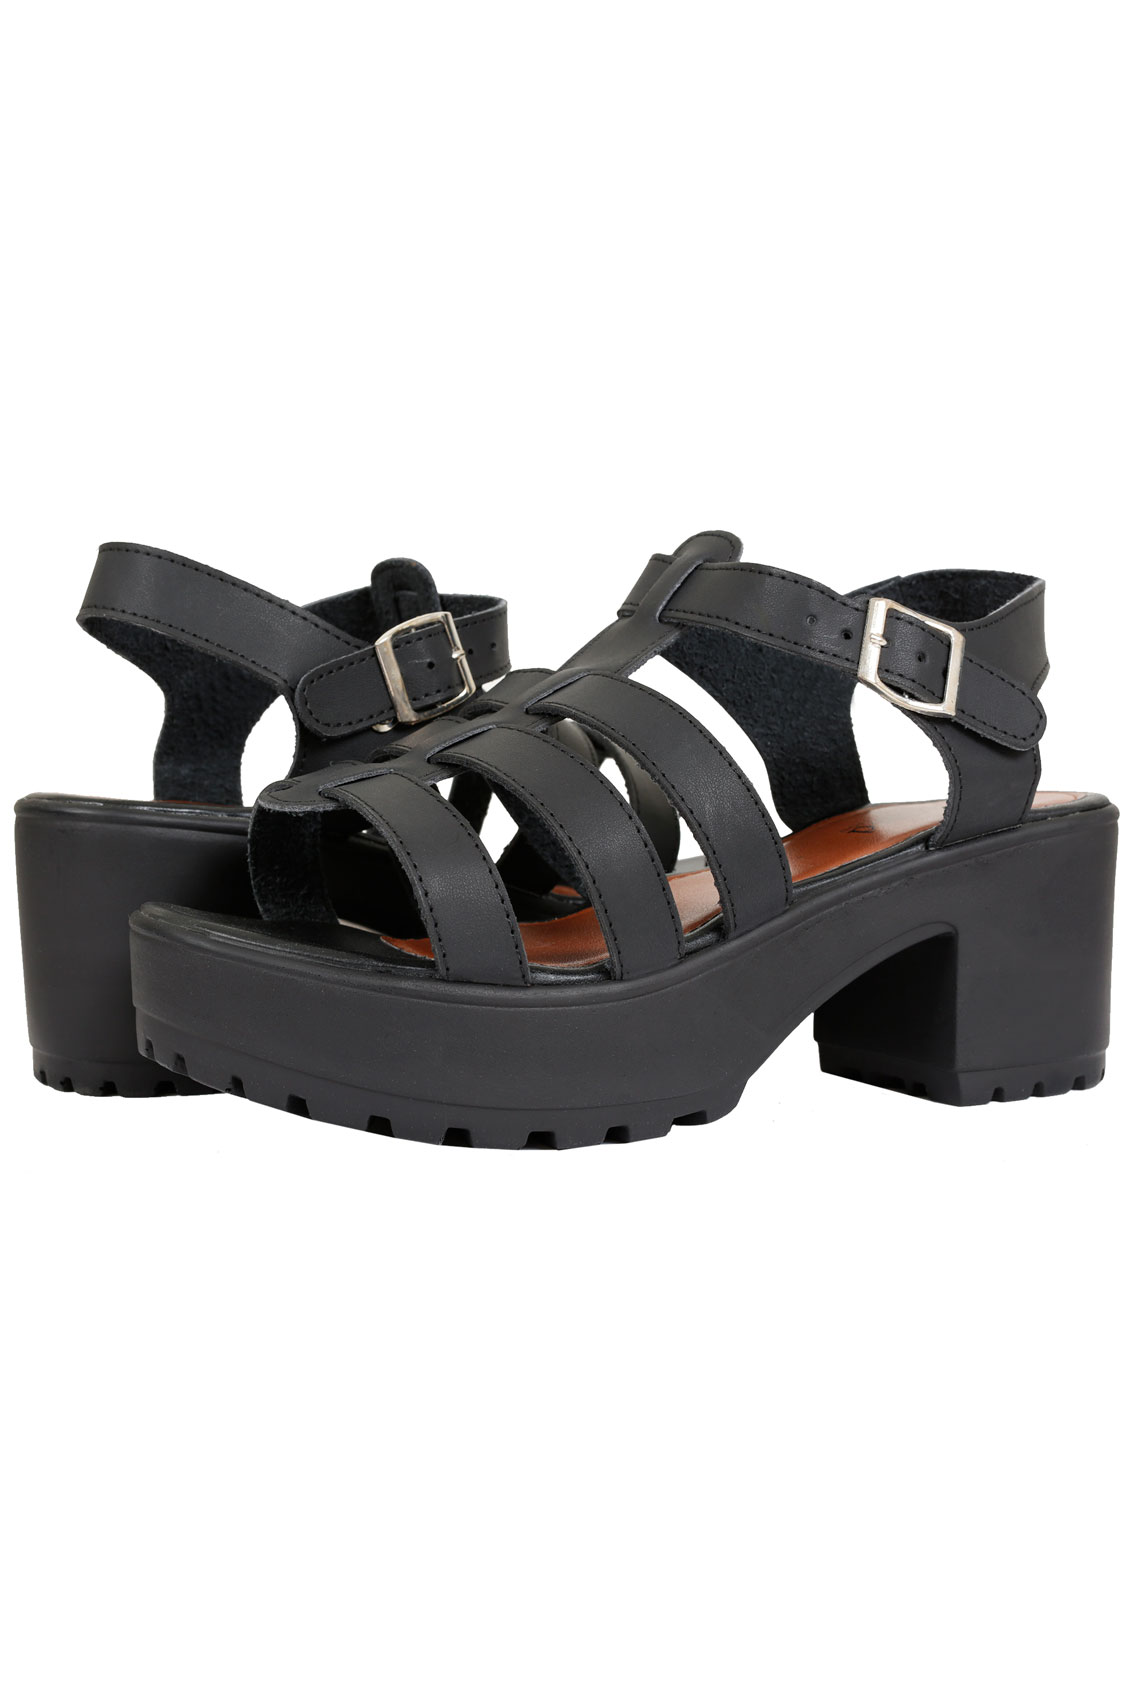 Black Cleated Platform Gladiator Sandals In EEE Fit